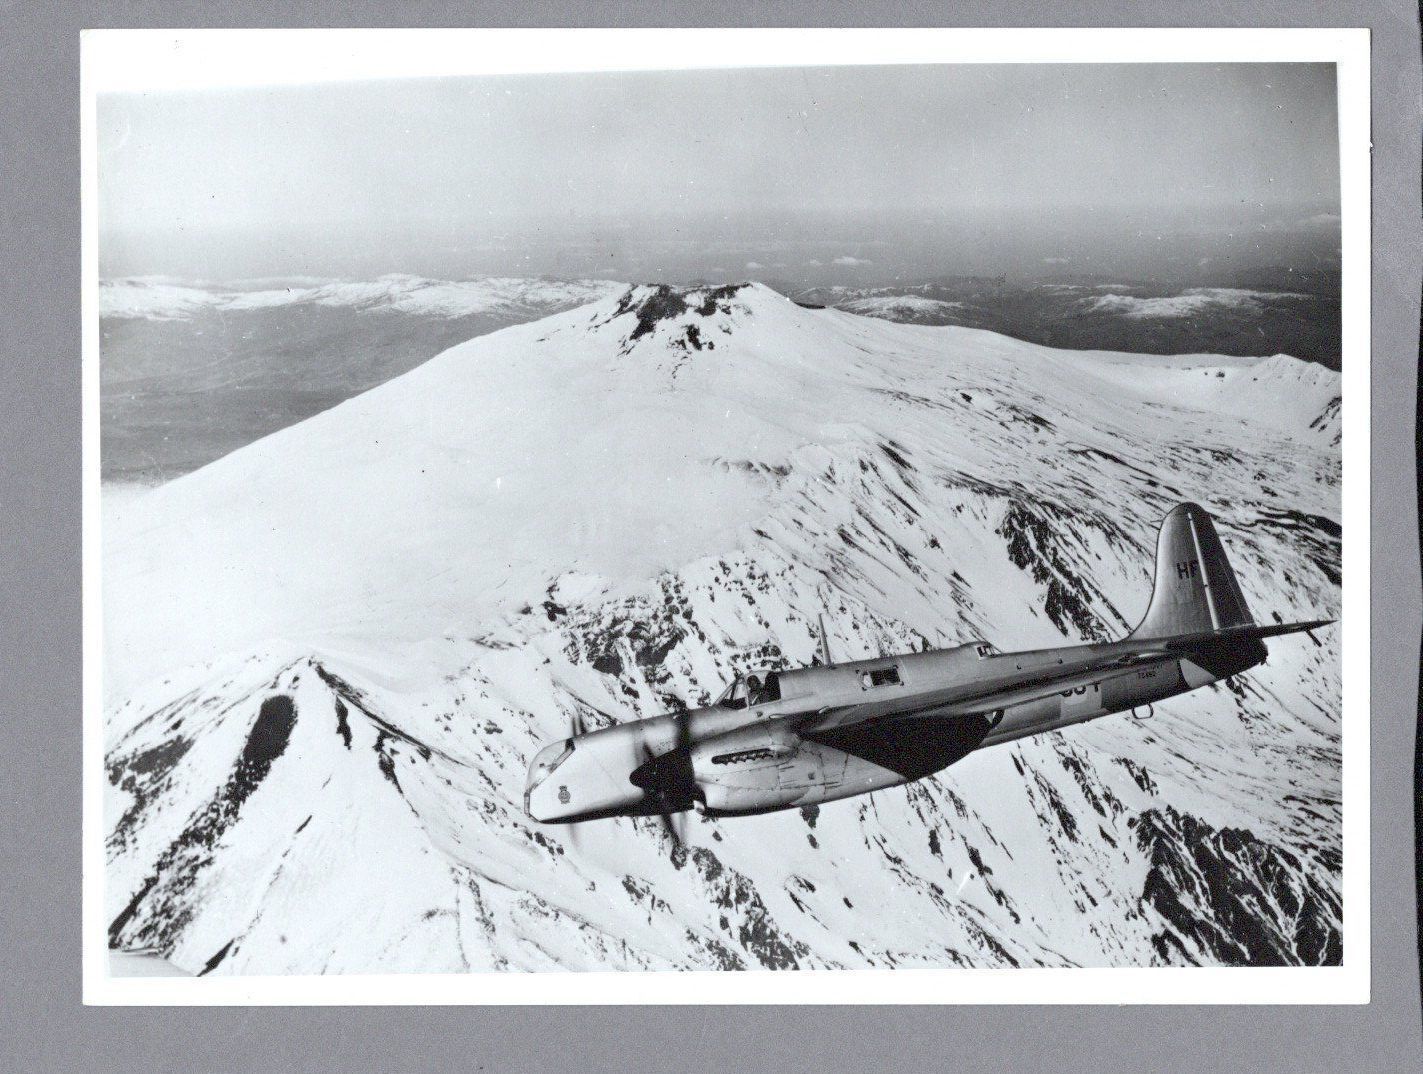  SHORT STURGEON 728 SQUADRON MOUNT ETNA LARGE VINTAGE OFFICIAL ADMIRALTY PHOTO 